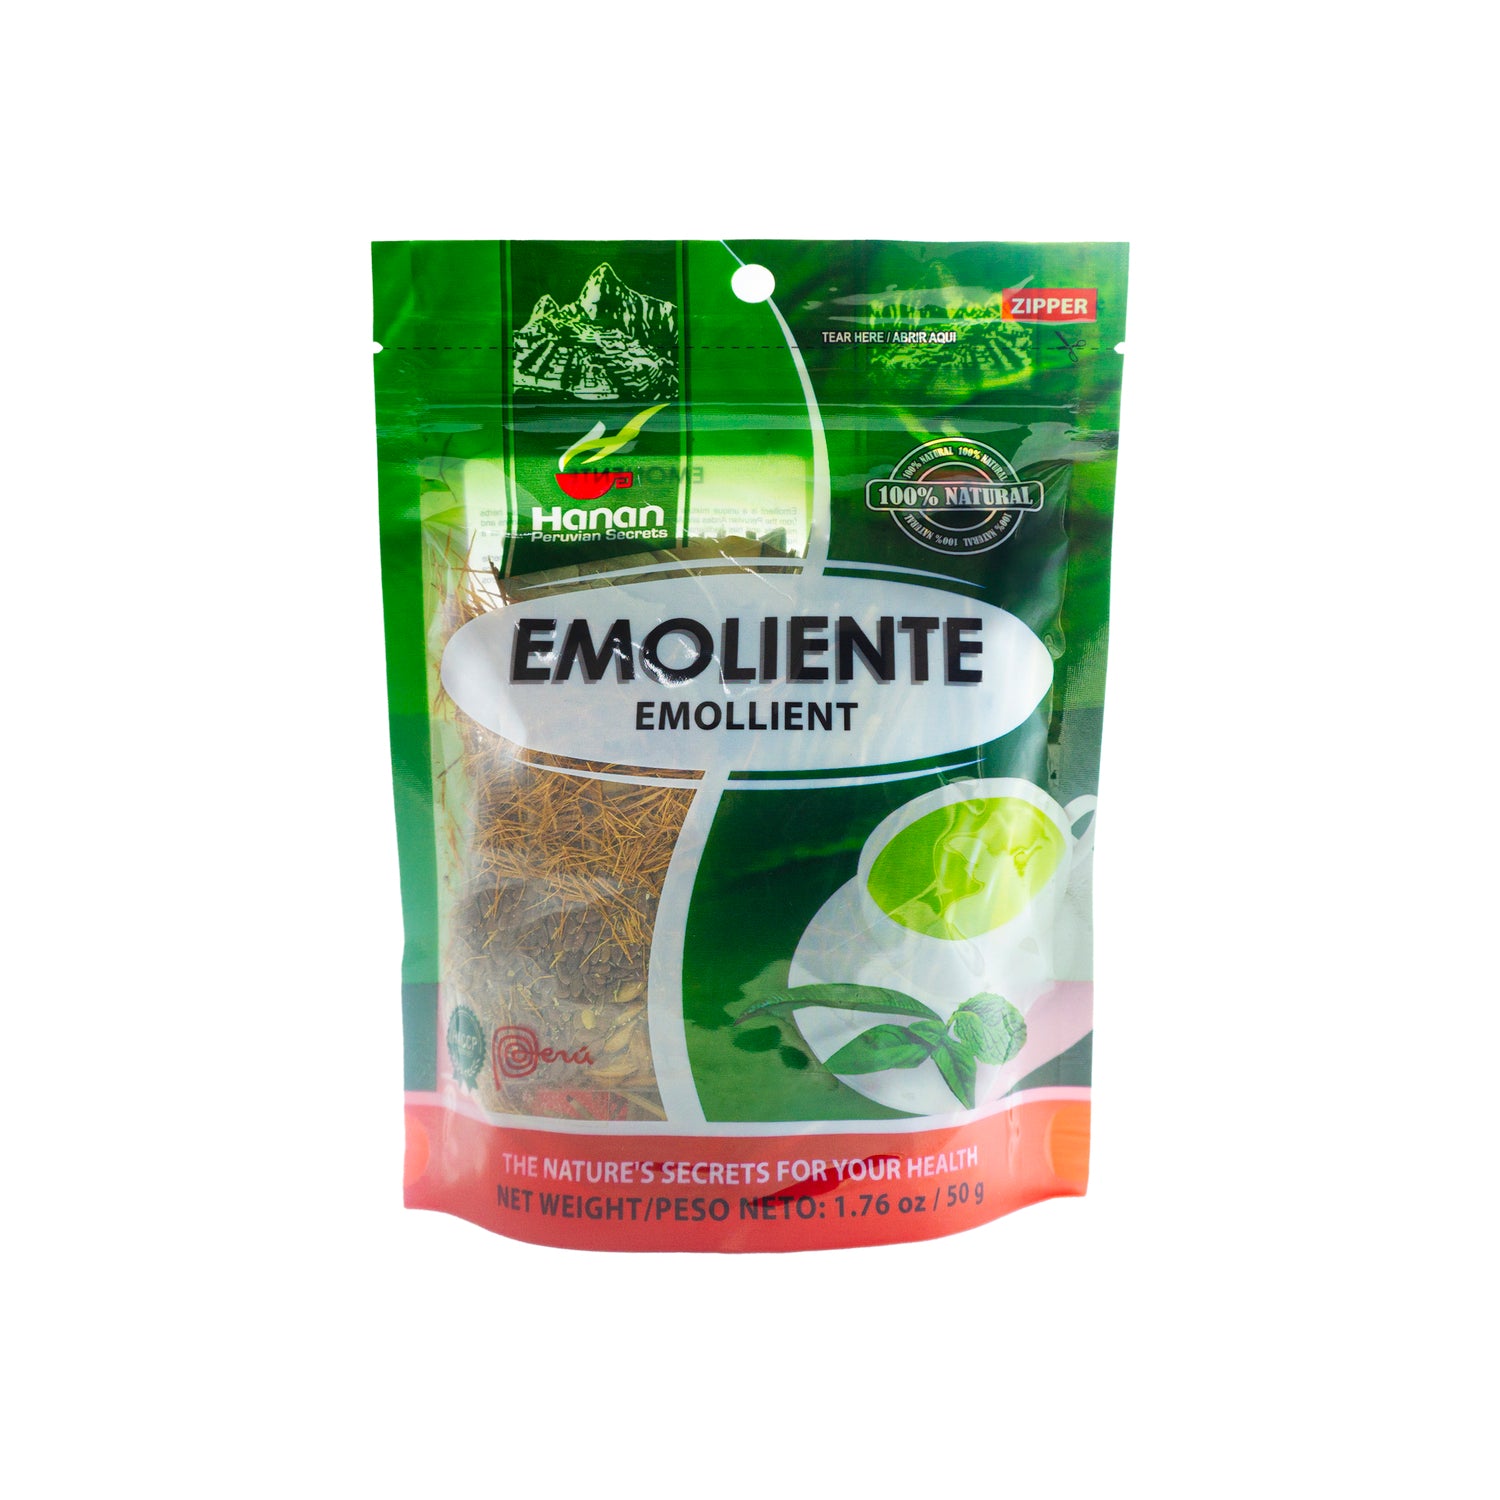 Emoliente Emollient Blend | Loose Tea | 1.76oz (50g)